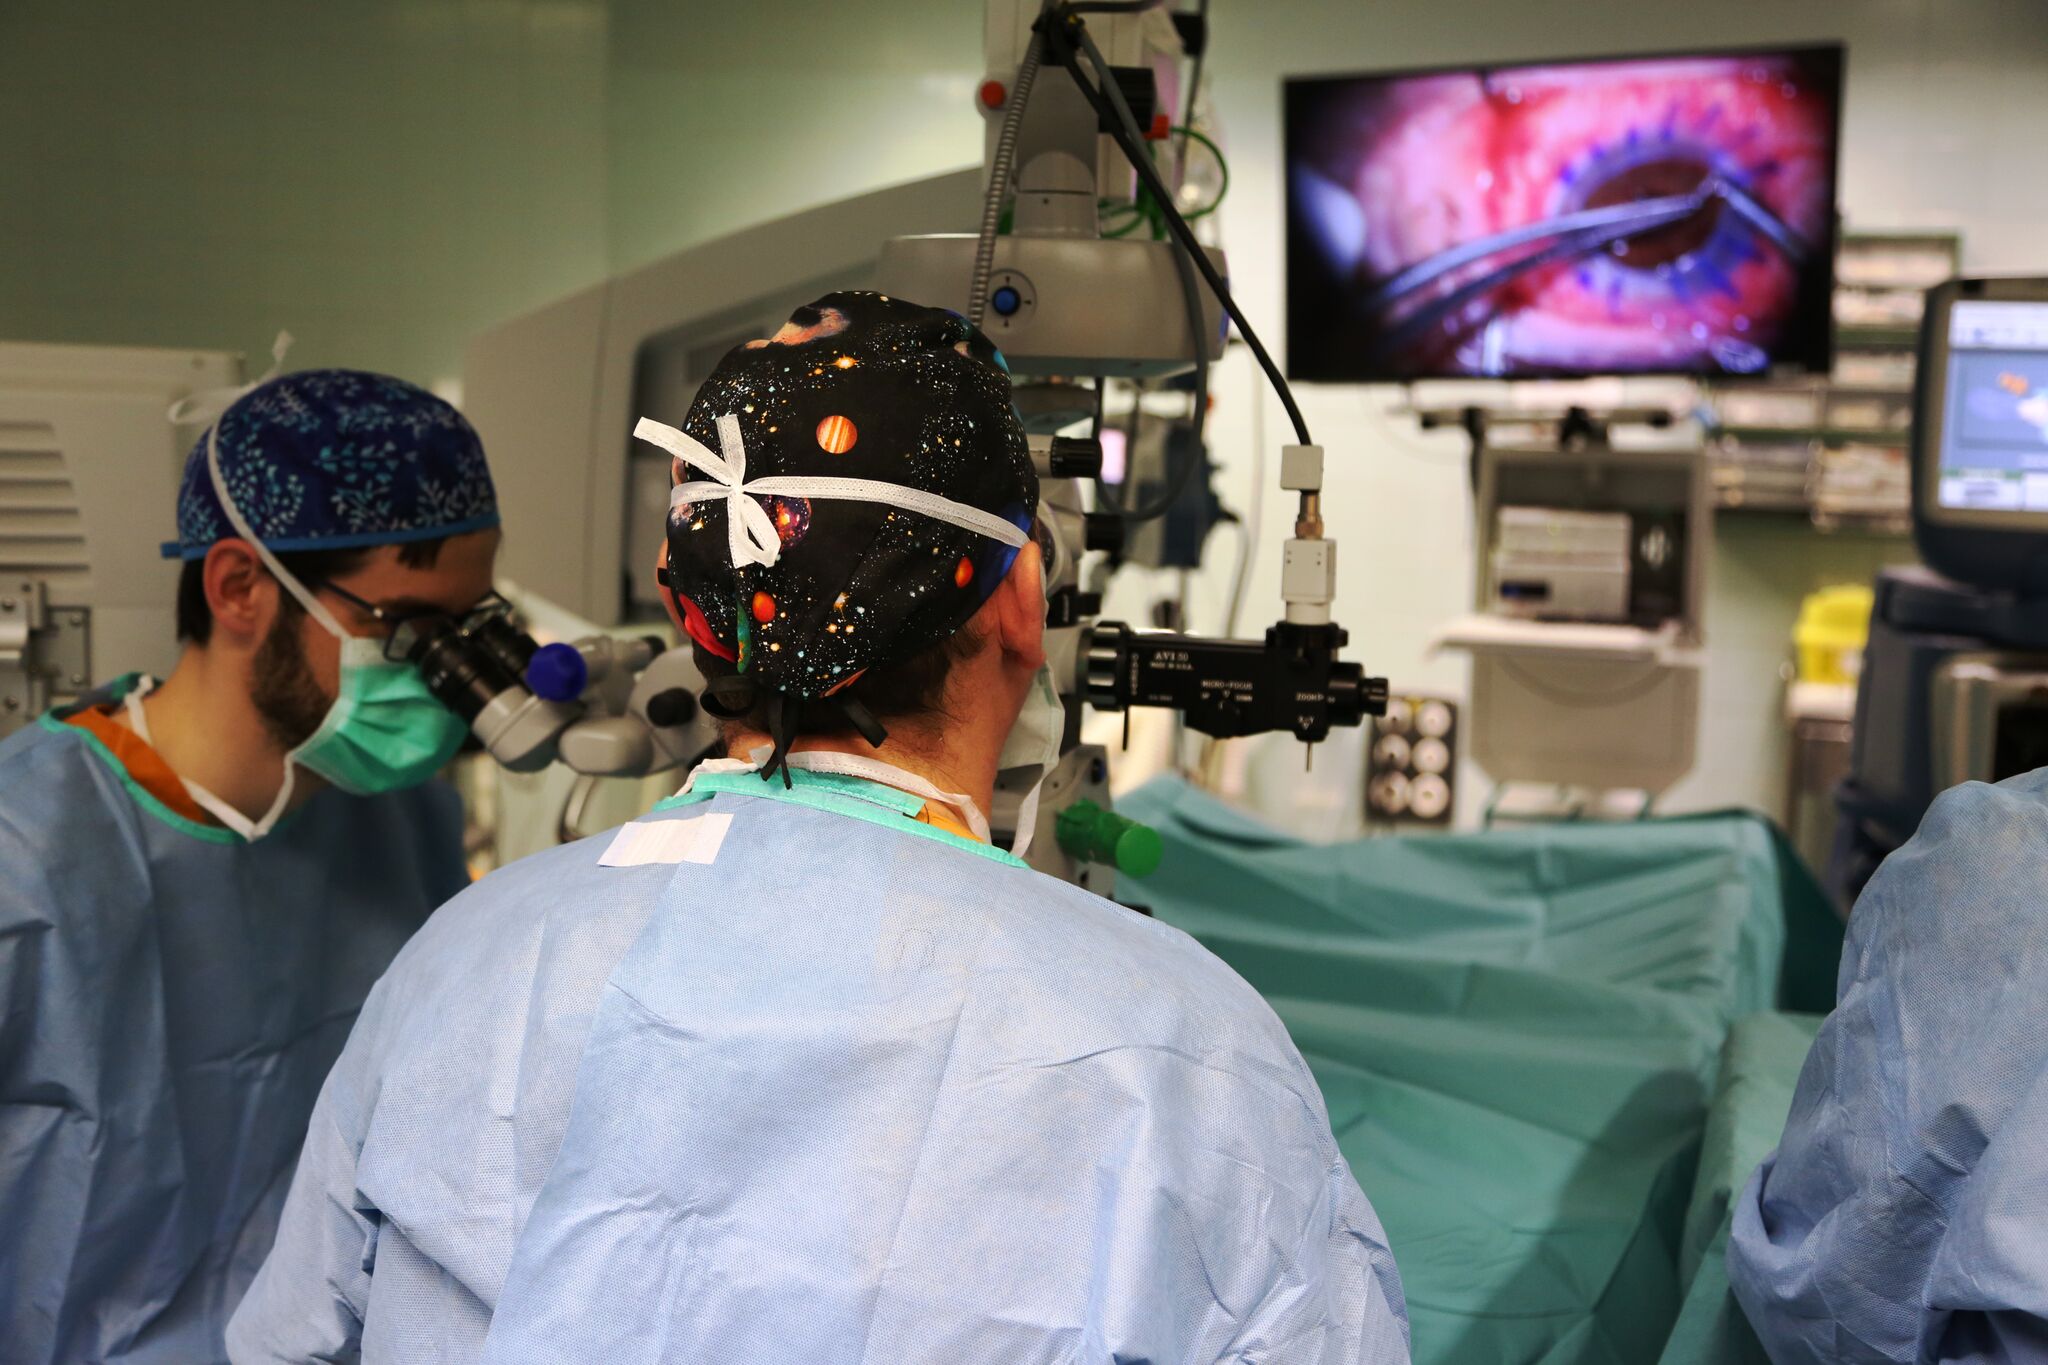 A cornea transplant at the Vall d'Hebron hospital on June 8 2017 (by Elisenda Rosanas)